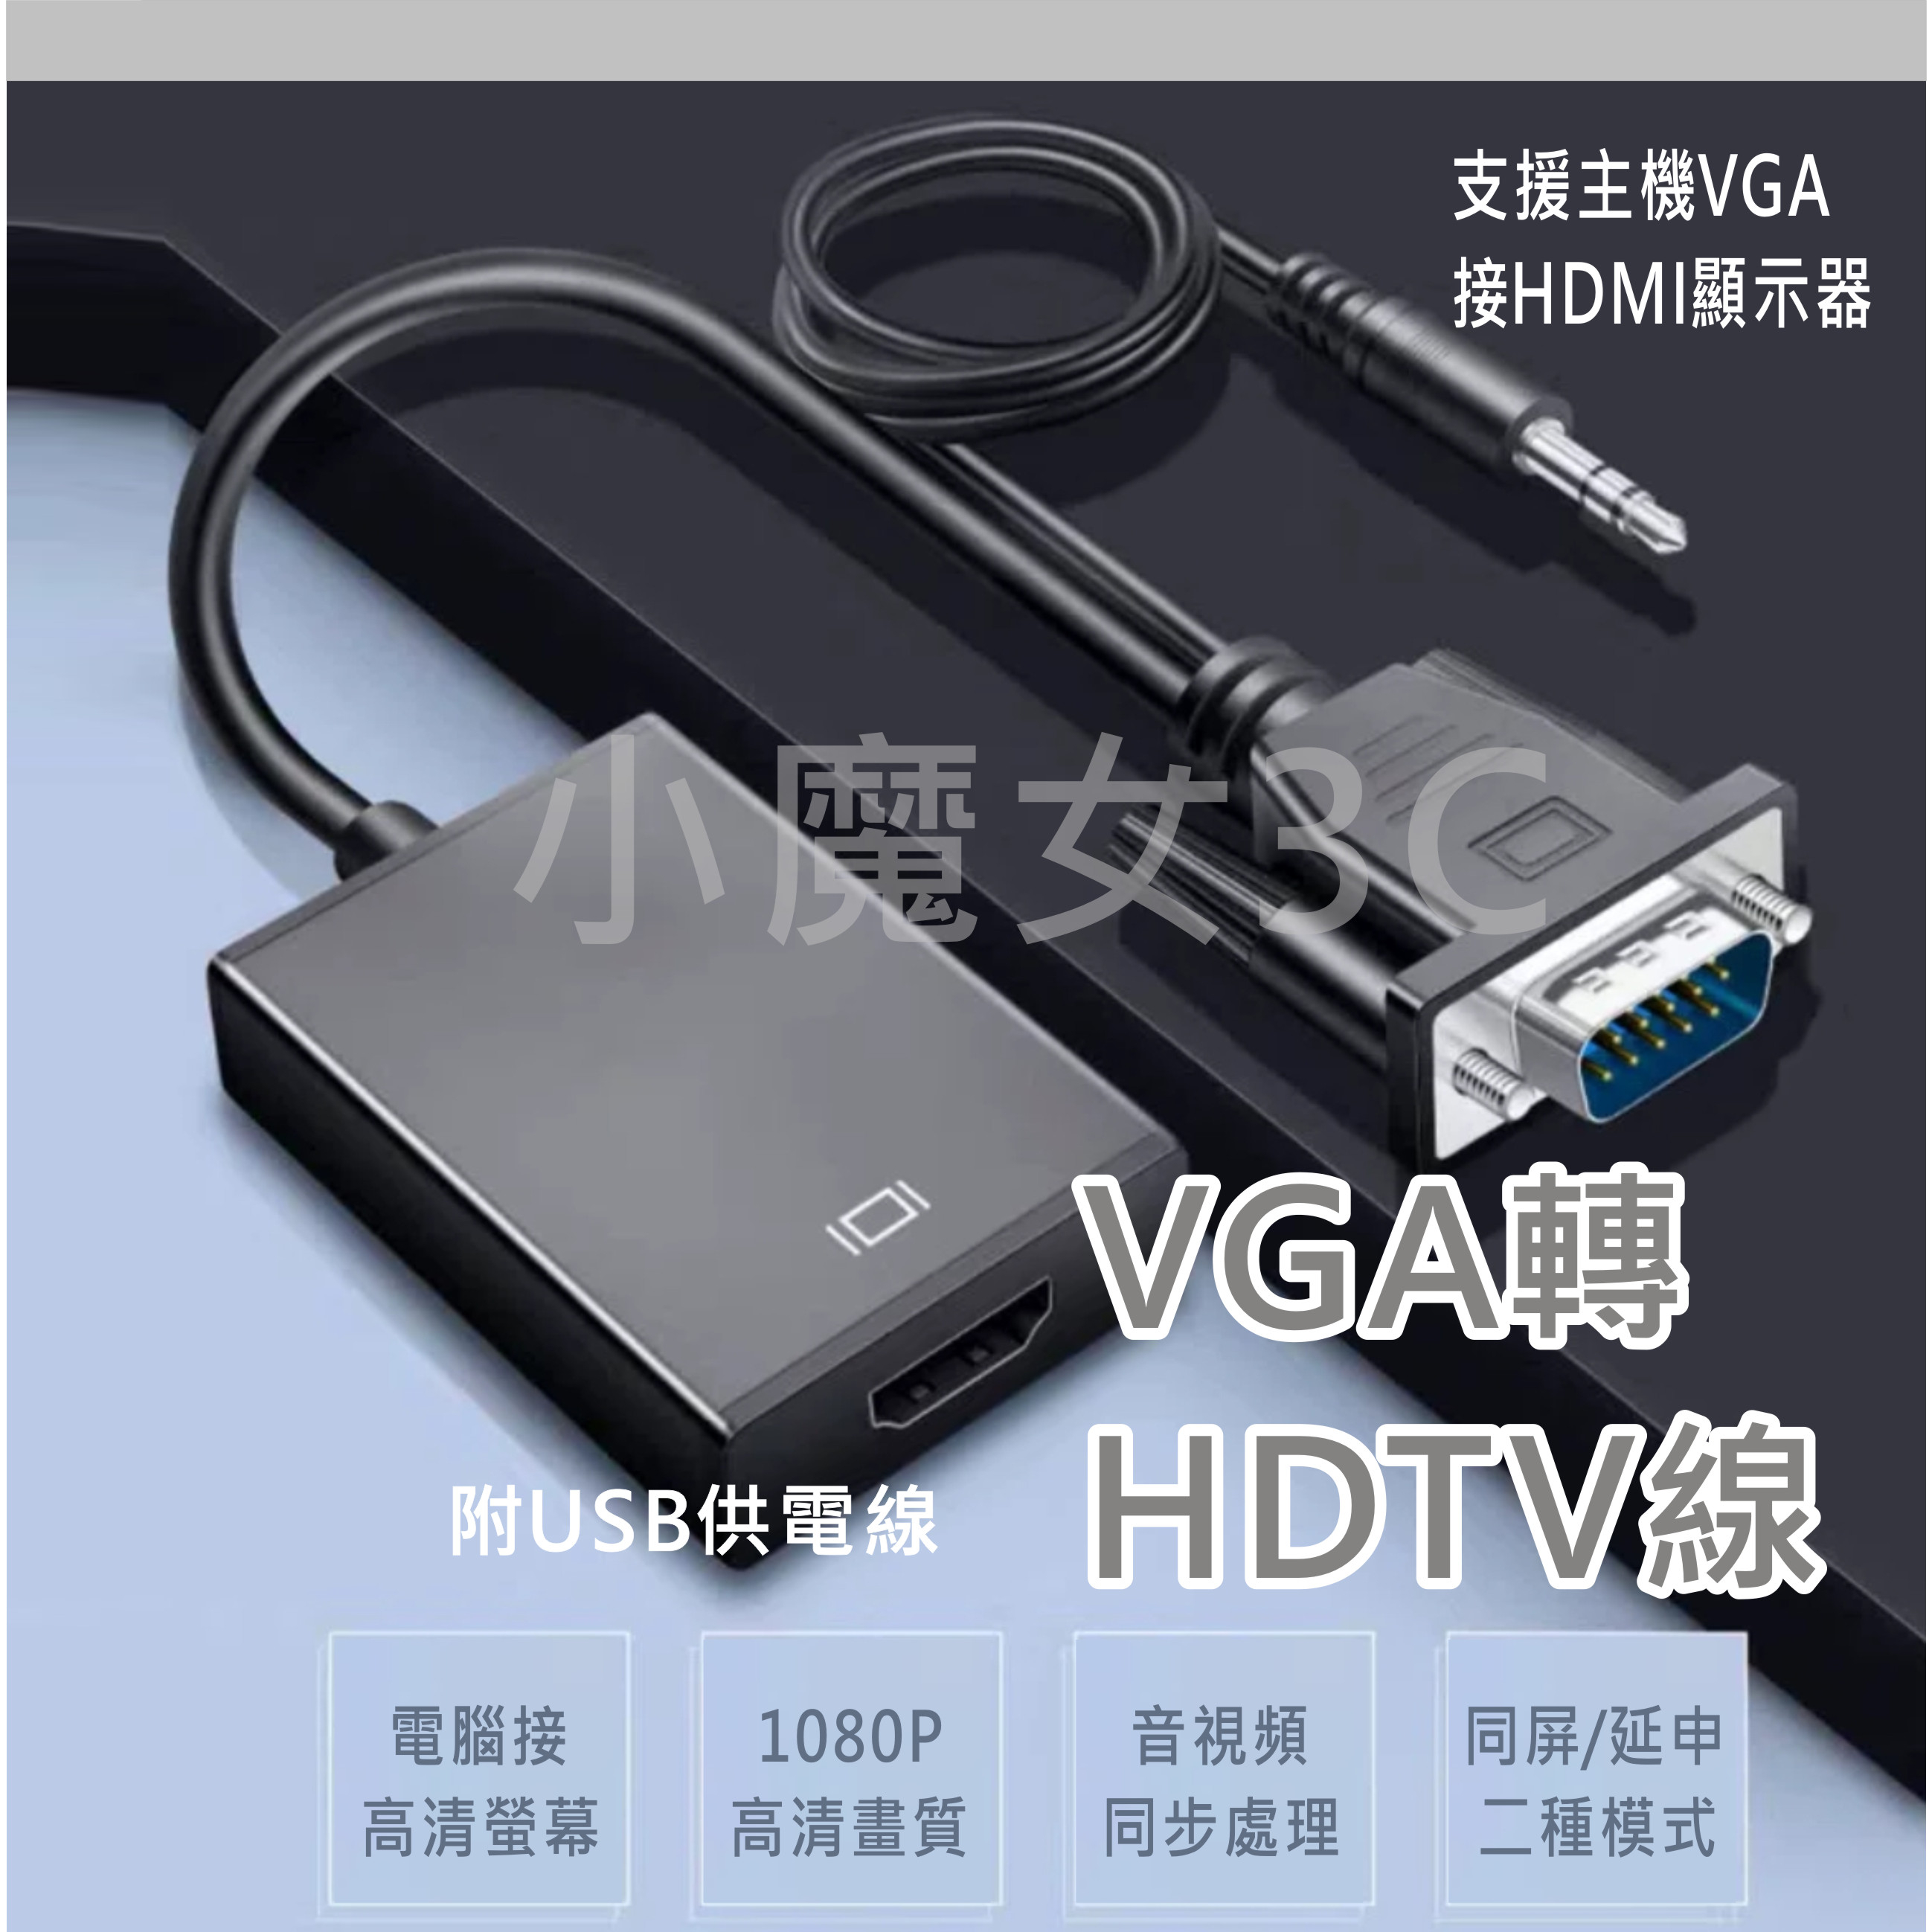 VGA轉HDMI 轉接線 VGA TO HDTV 高清線 轉接器 轉換線 電腦VGA轉HDMI螢幕 音視頻同步 單向使用